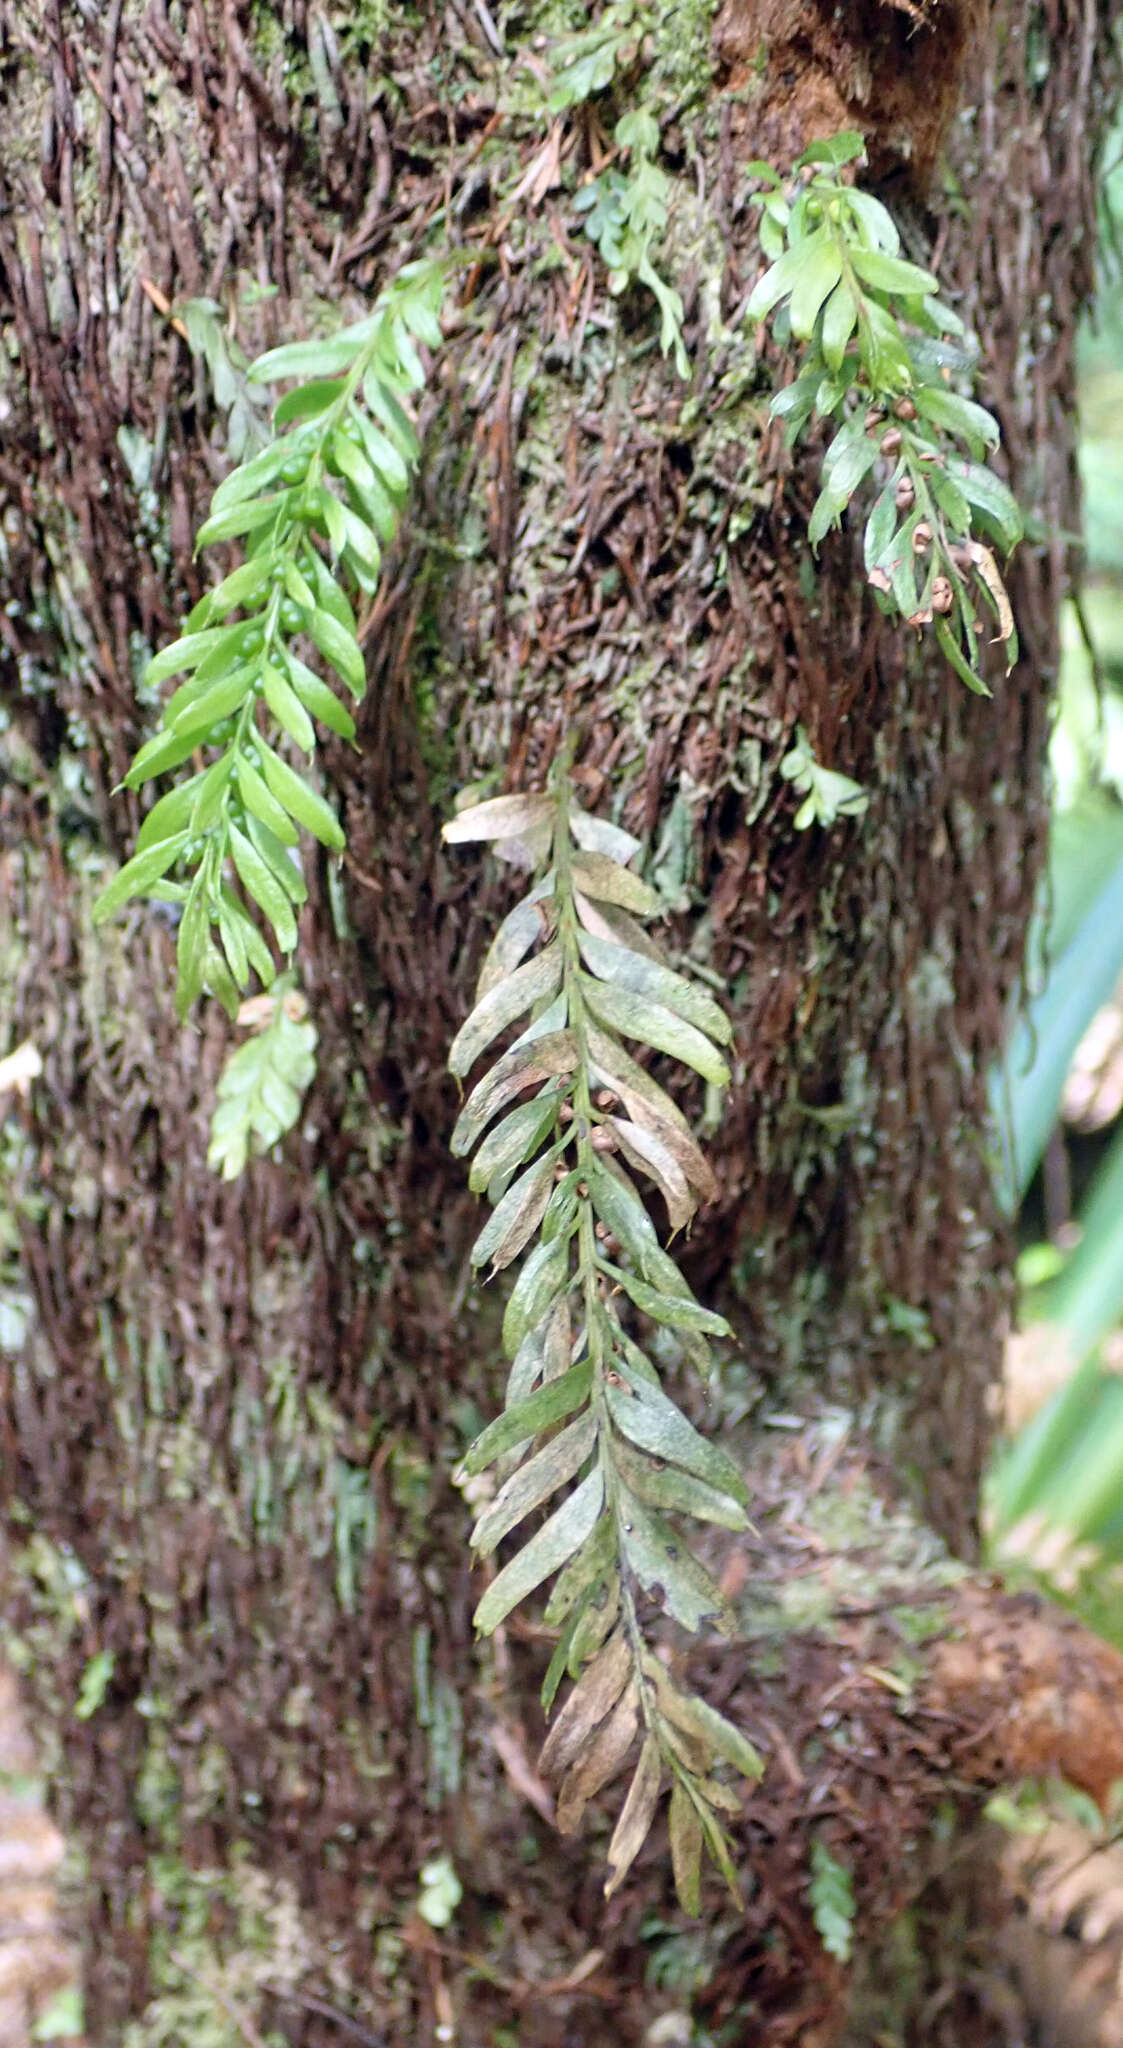 Image of Tmesipteris sigmatifolia Chinnock